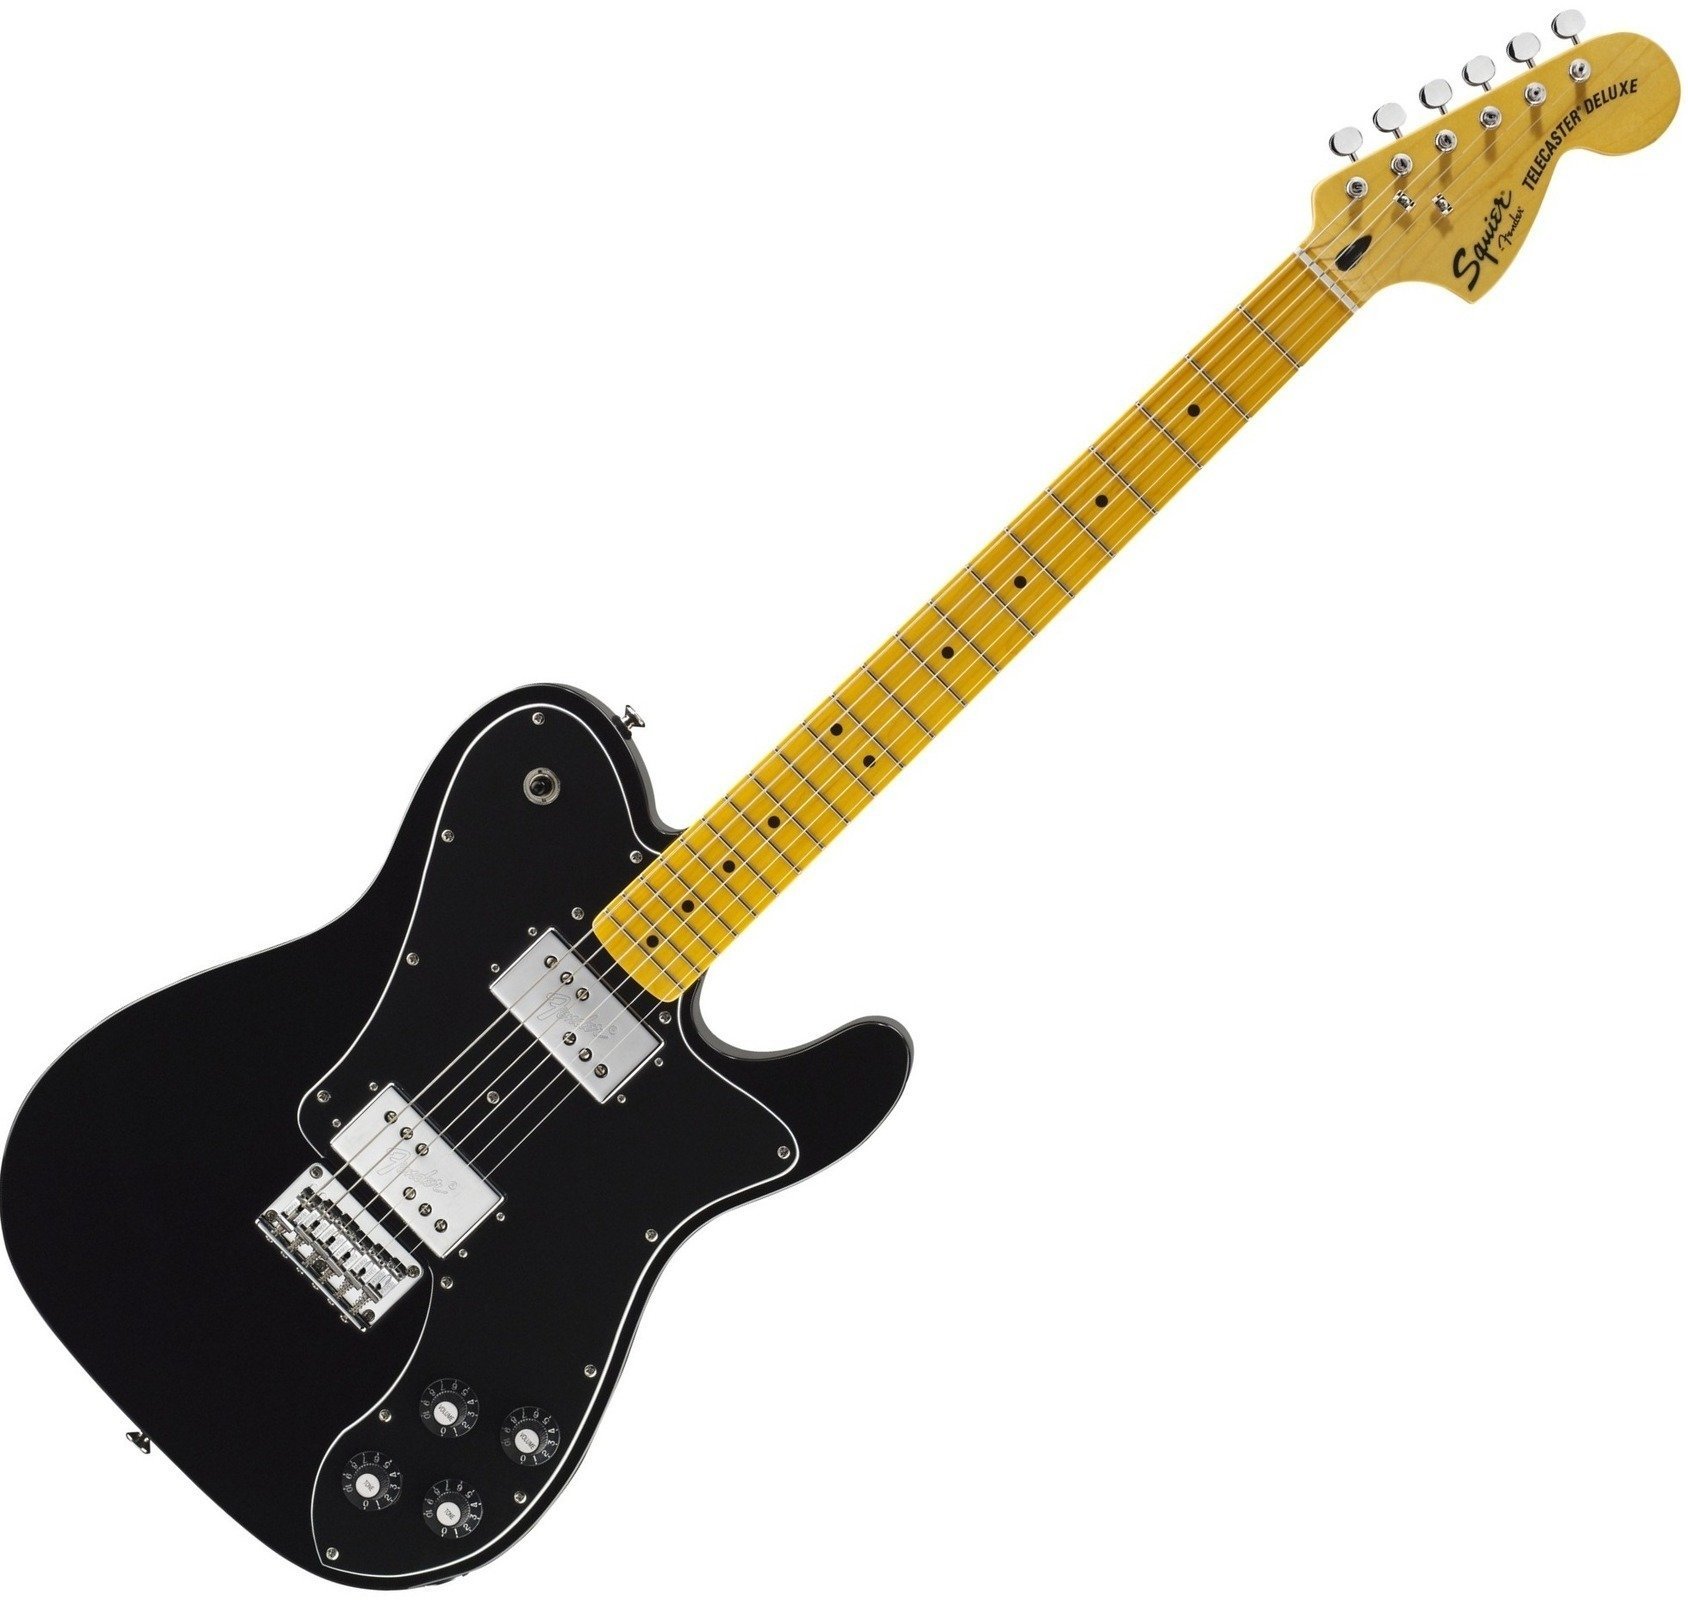 Electric guitar Fender Squier Vintage Modified Telecaster Deluxe Black